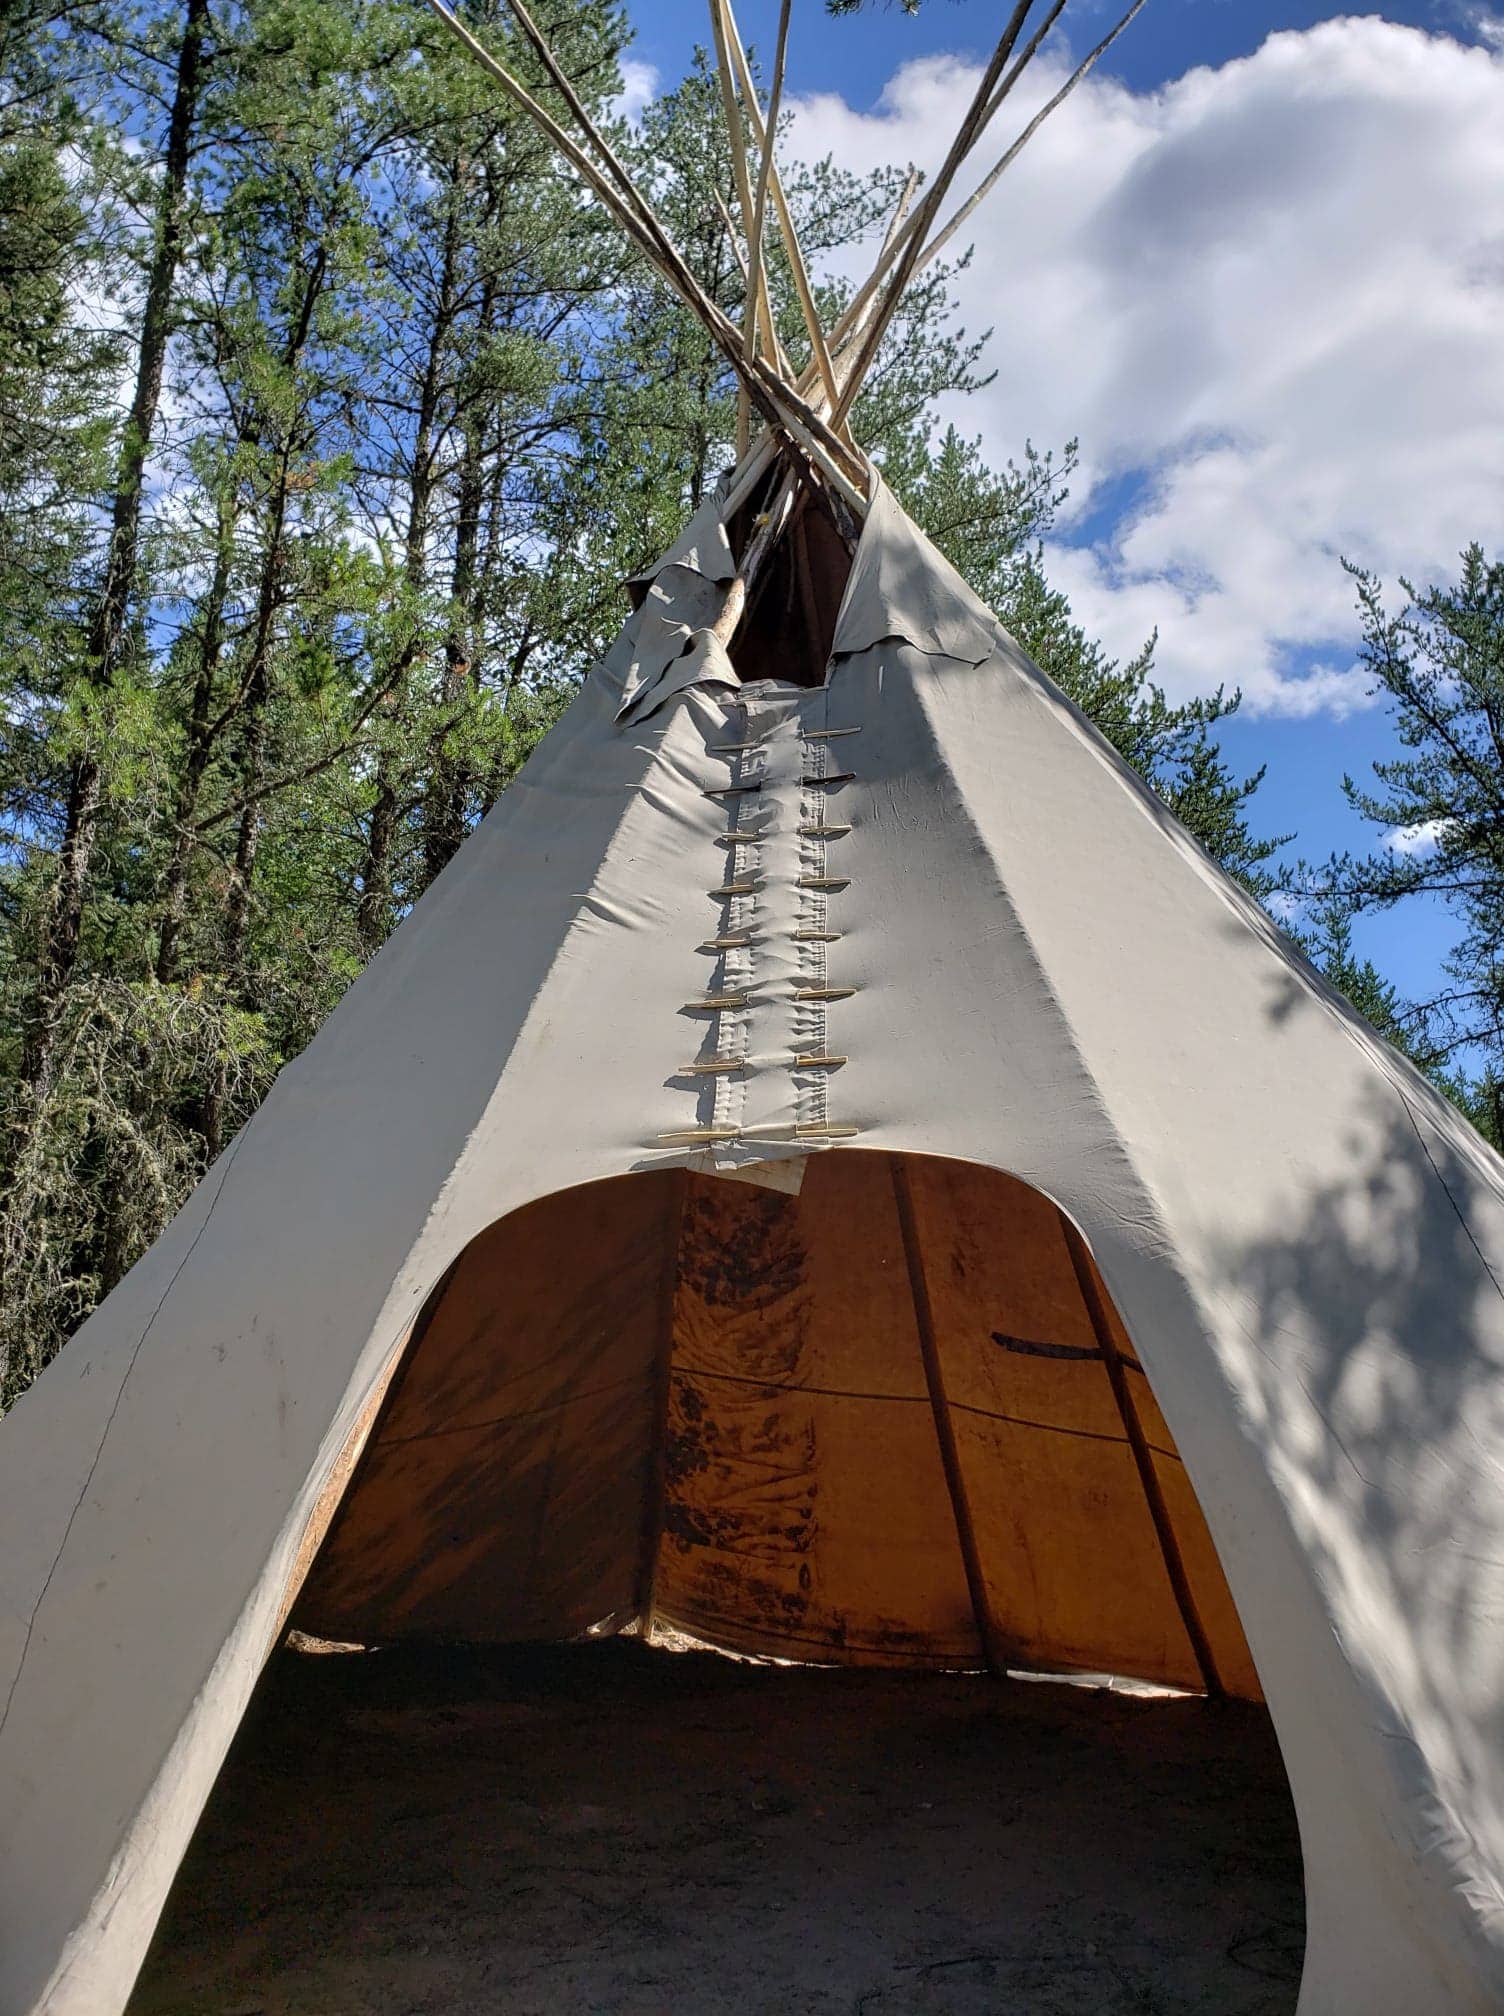 A teepee at Camp Morning Star. Photo: Reg Simard